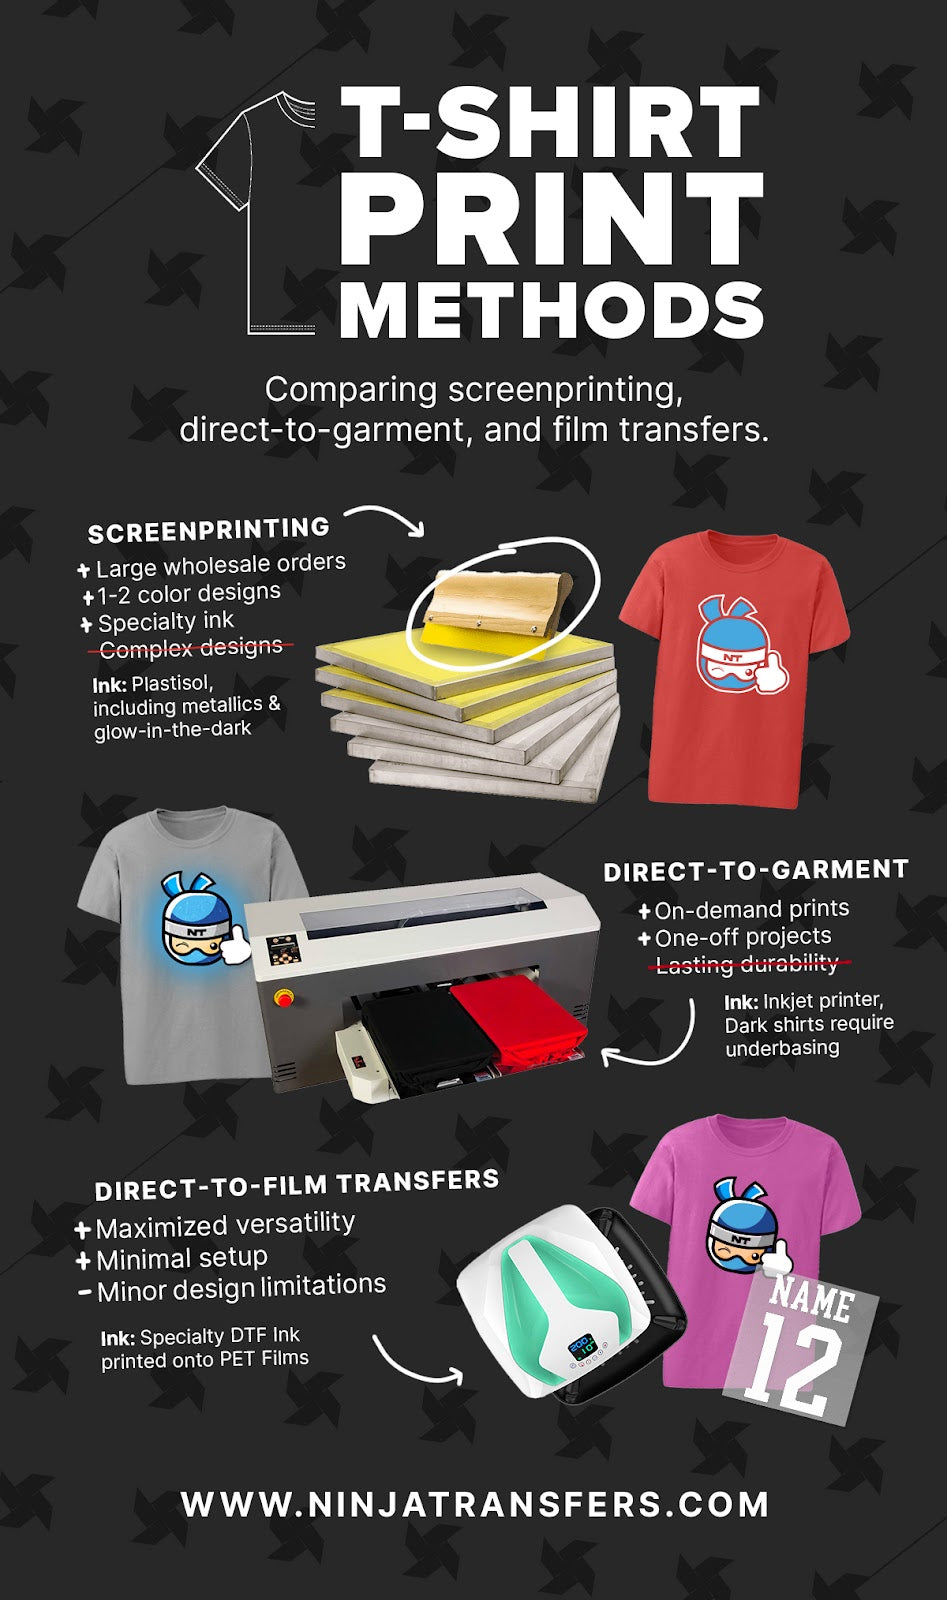 T-shirt print methods